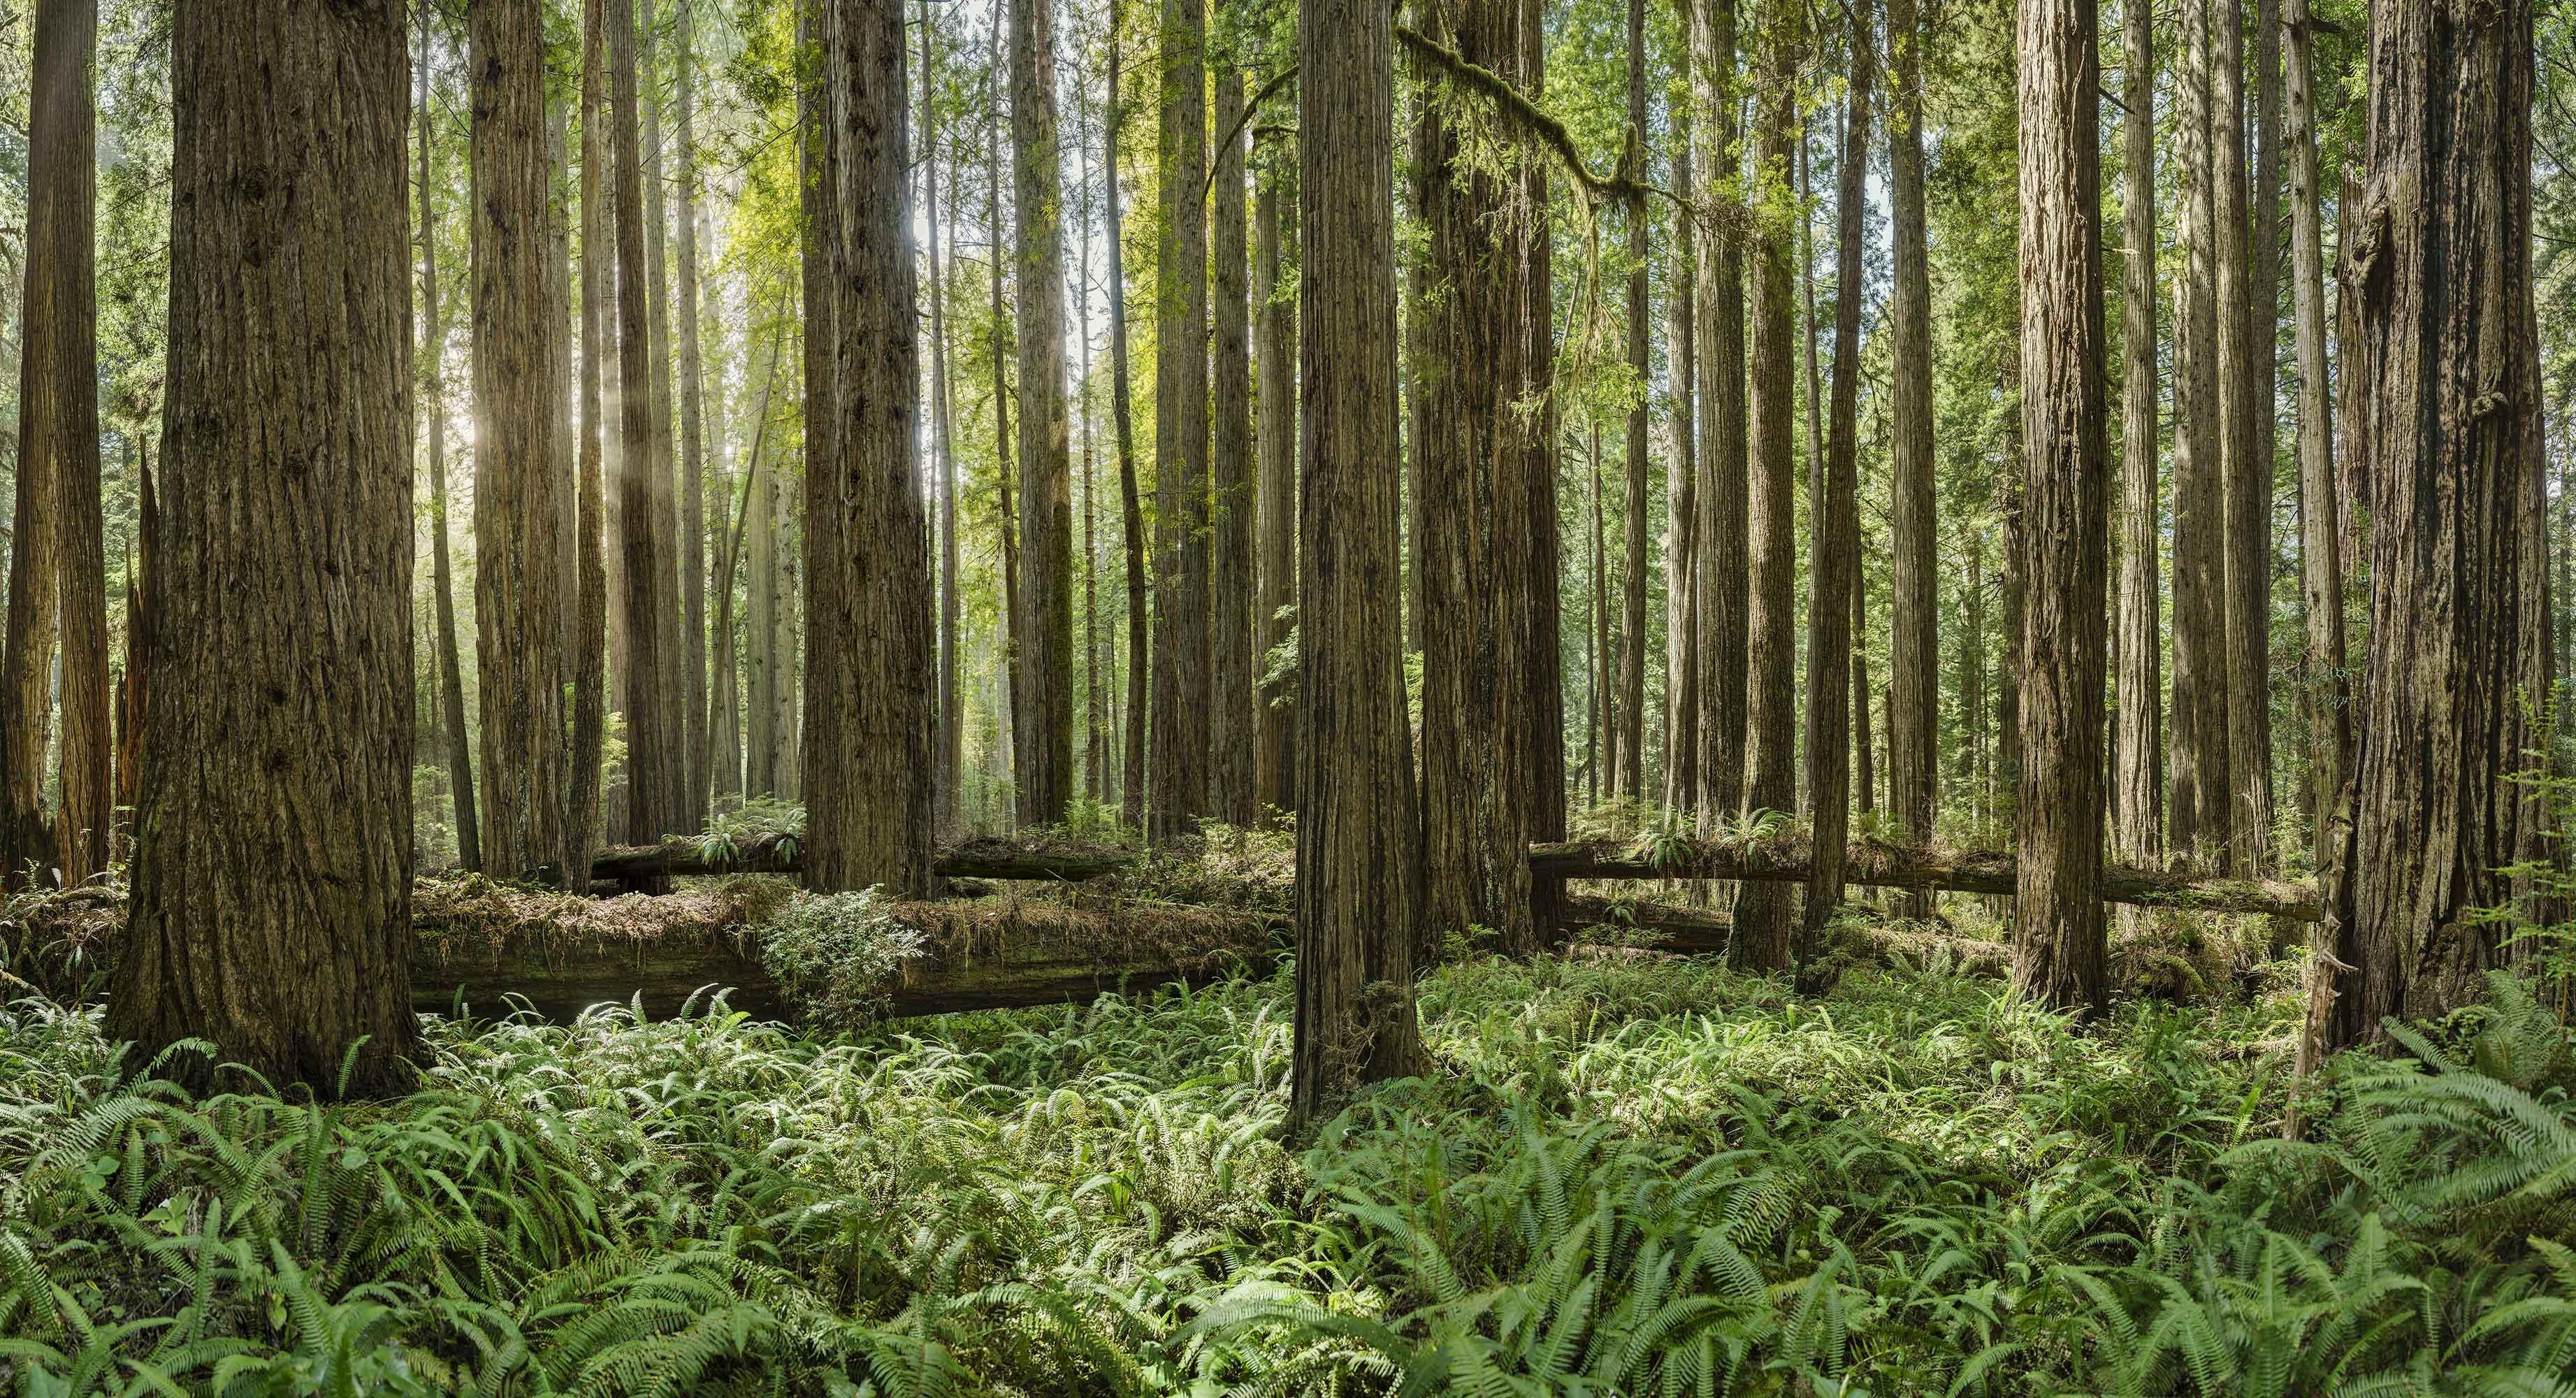 Erik Pawassar Landscape Photograph - Redwoods Study II - large format observation panorama of green redwoods forest